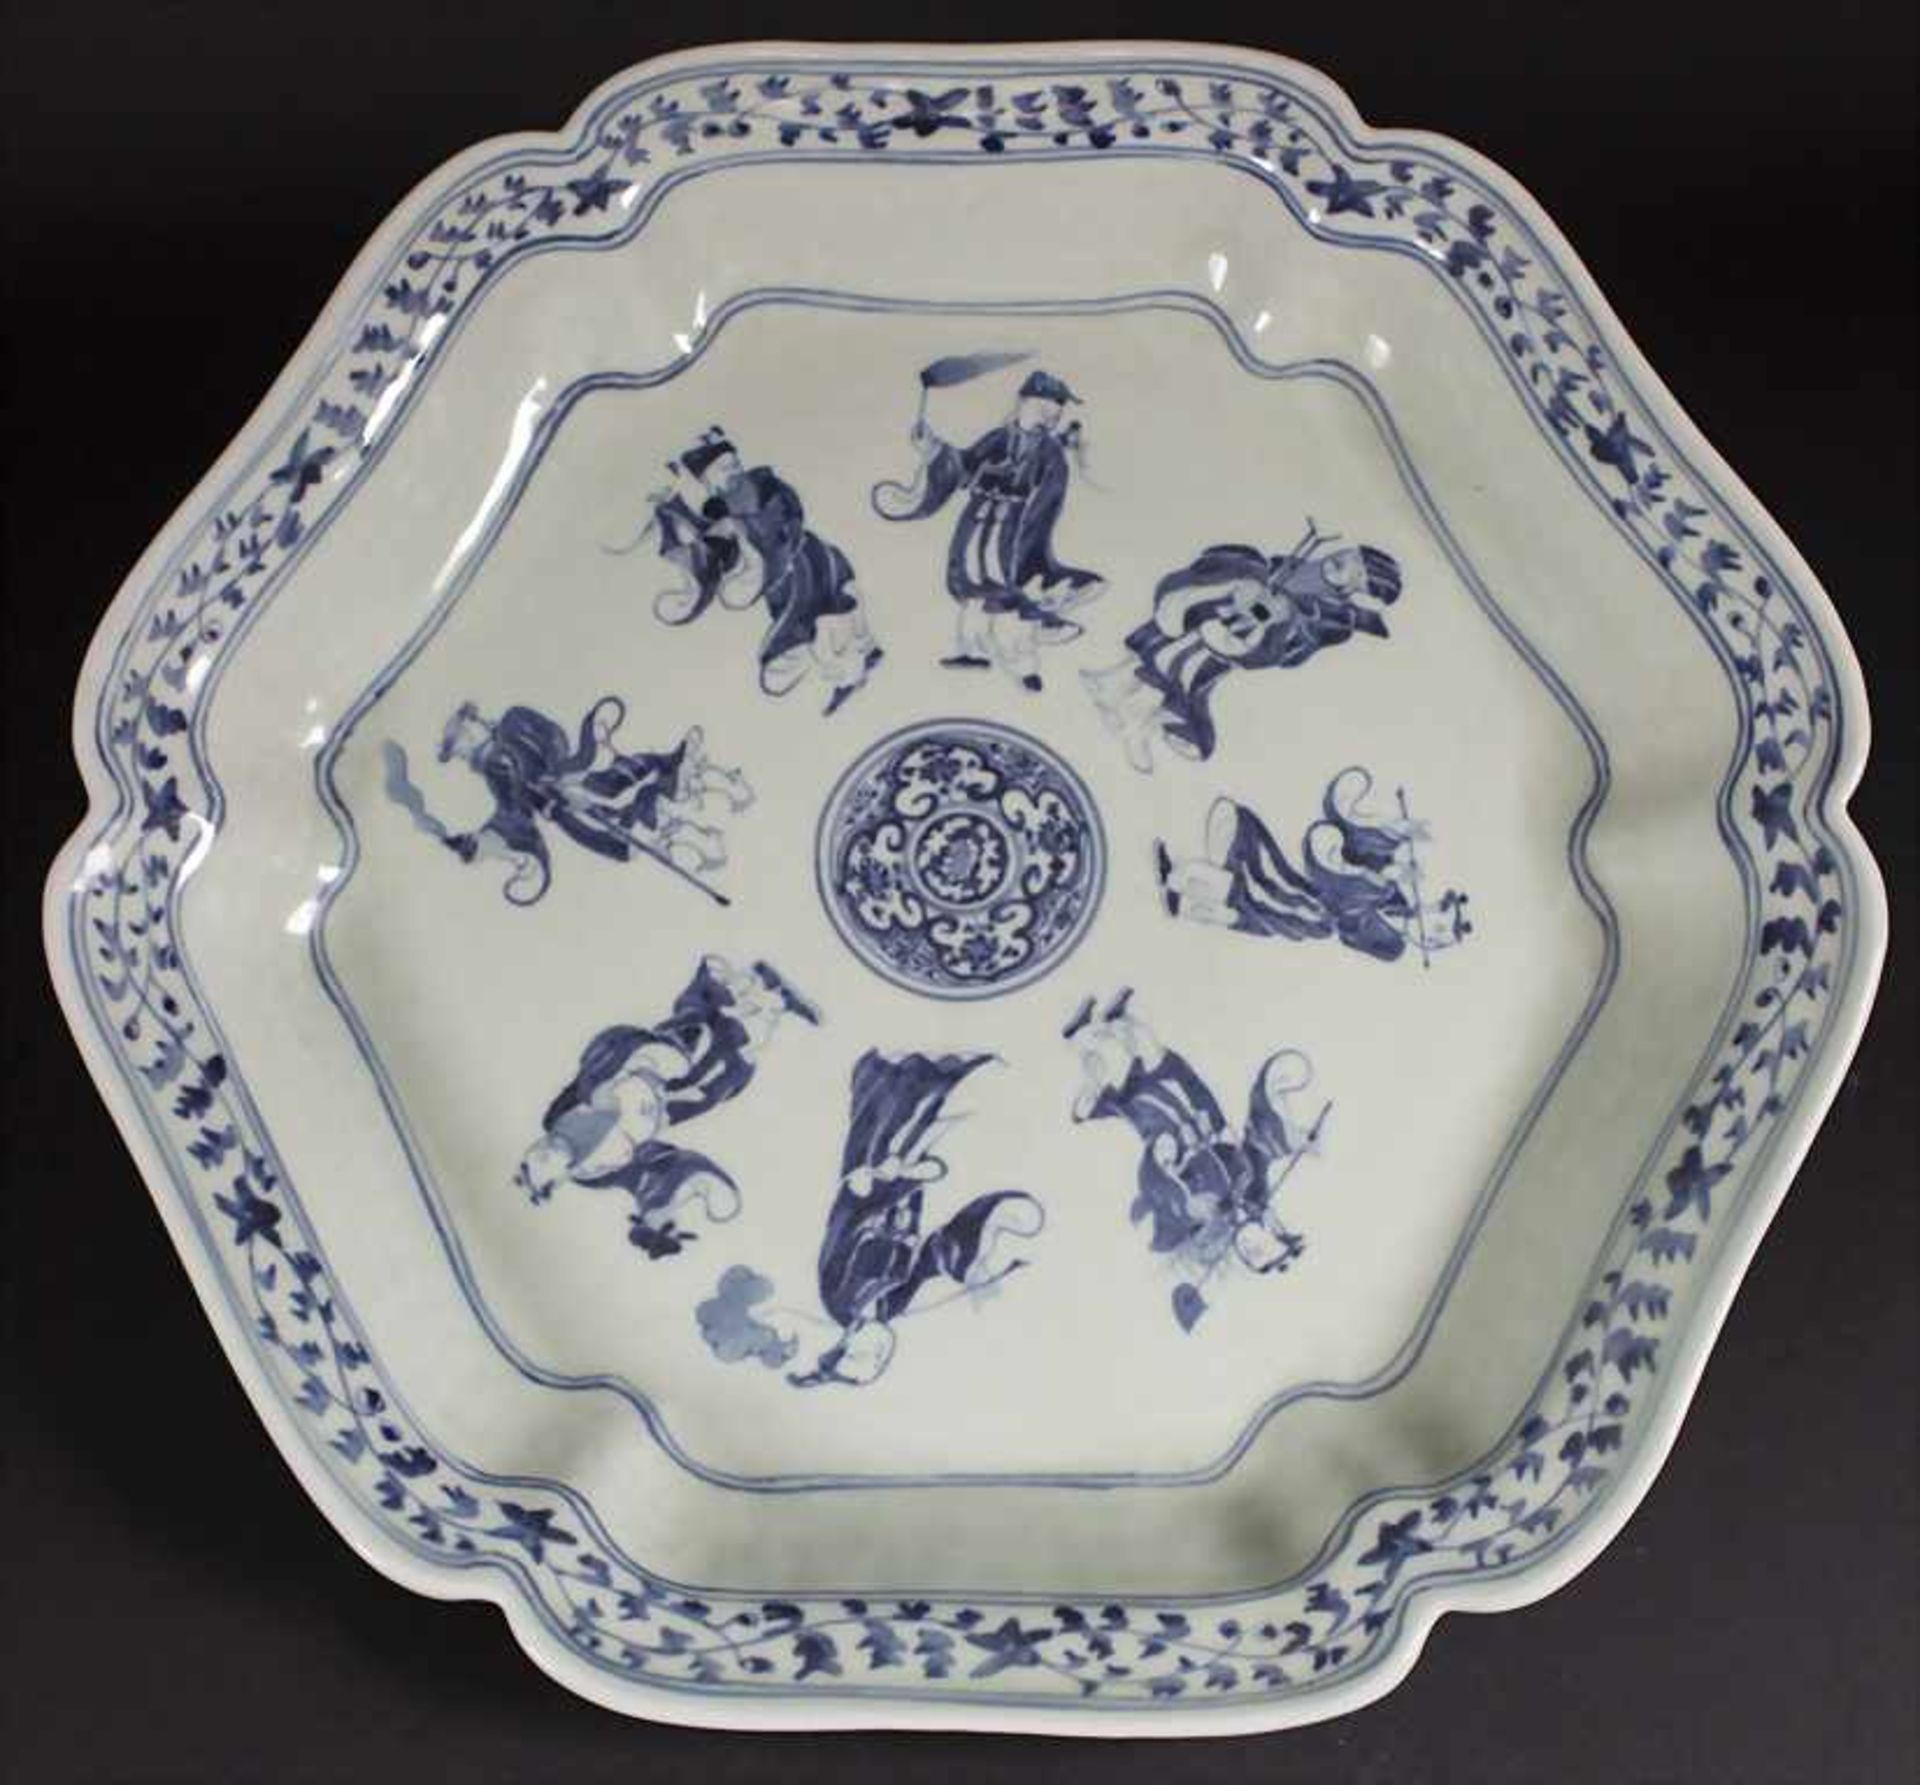 Große Porzellanplatte / A large porcelain platter, China, wohl 19./20. Jh.